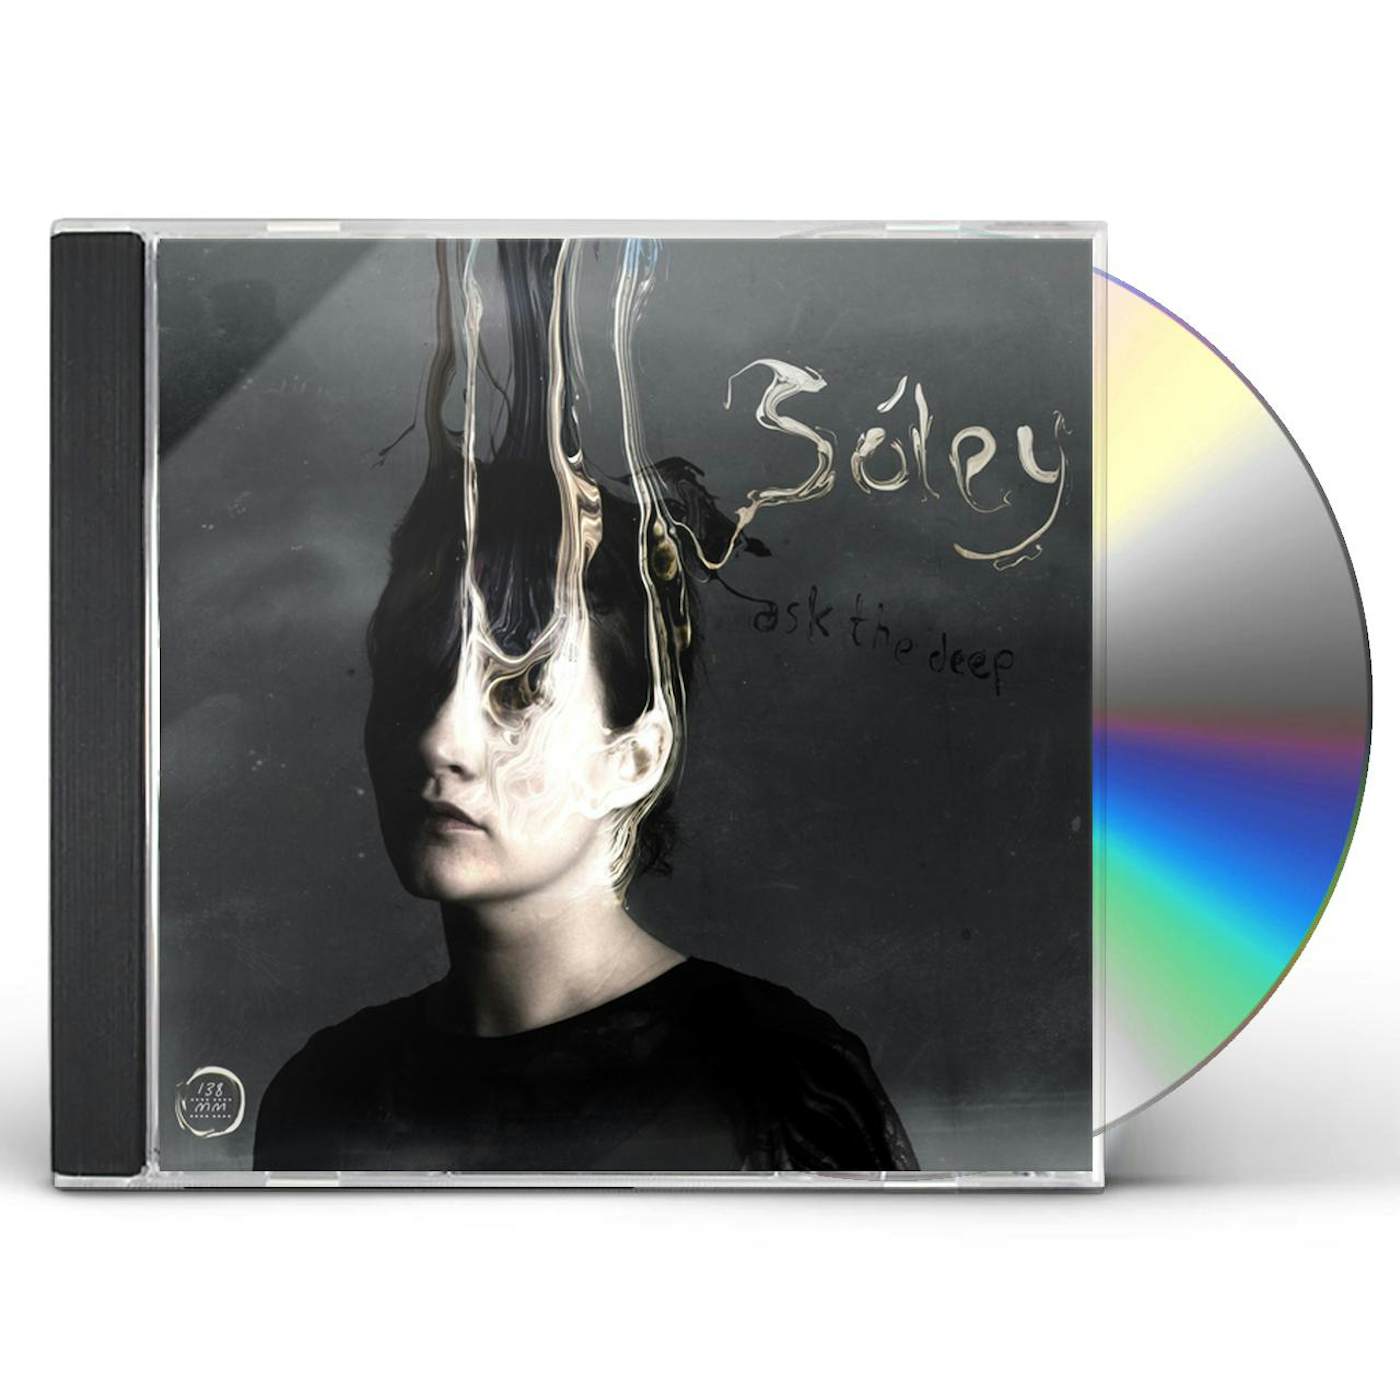 Sóley ASK THE DEEP CD